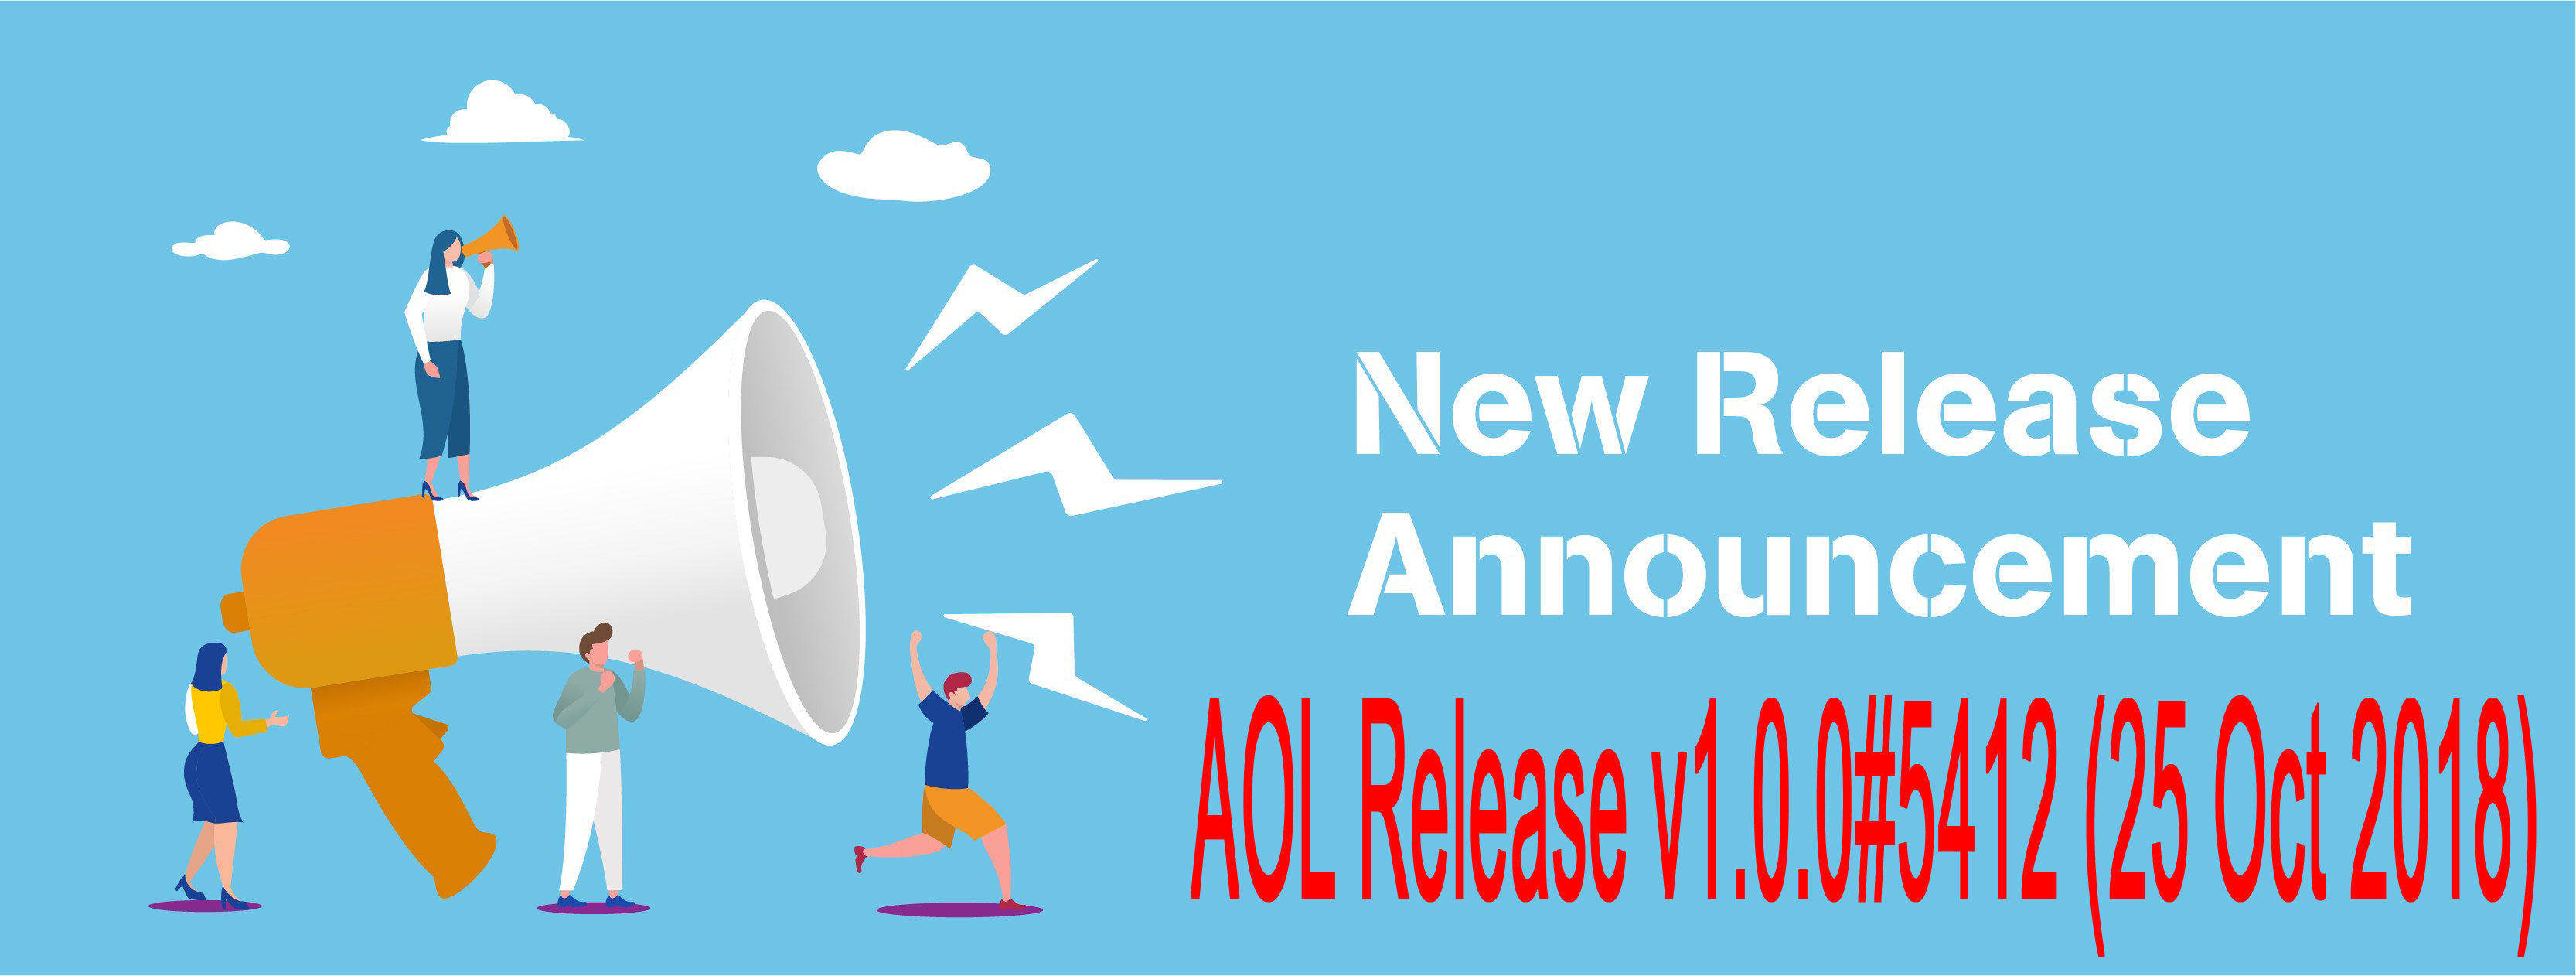 Release v1.0.0#5412 (25 Oct 2018)